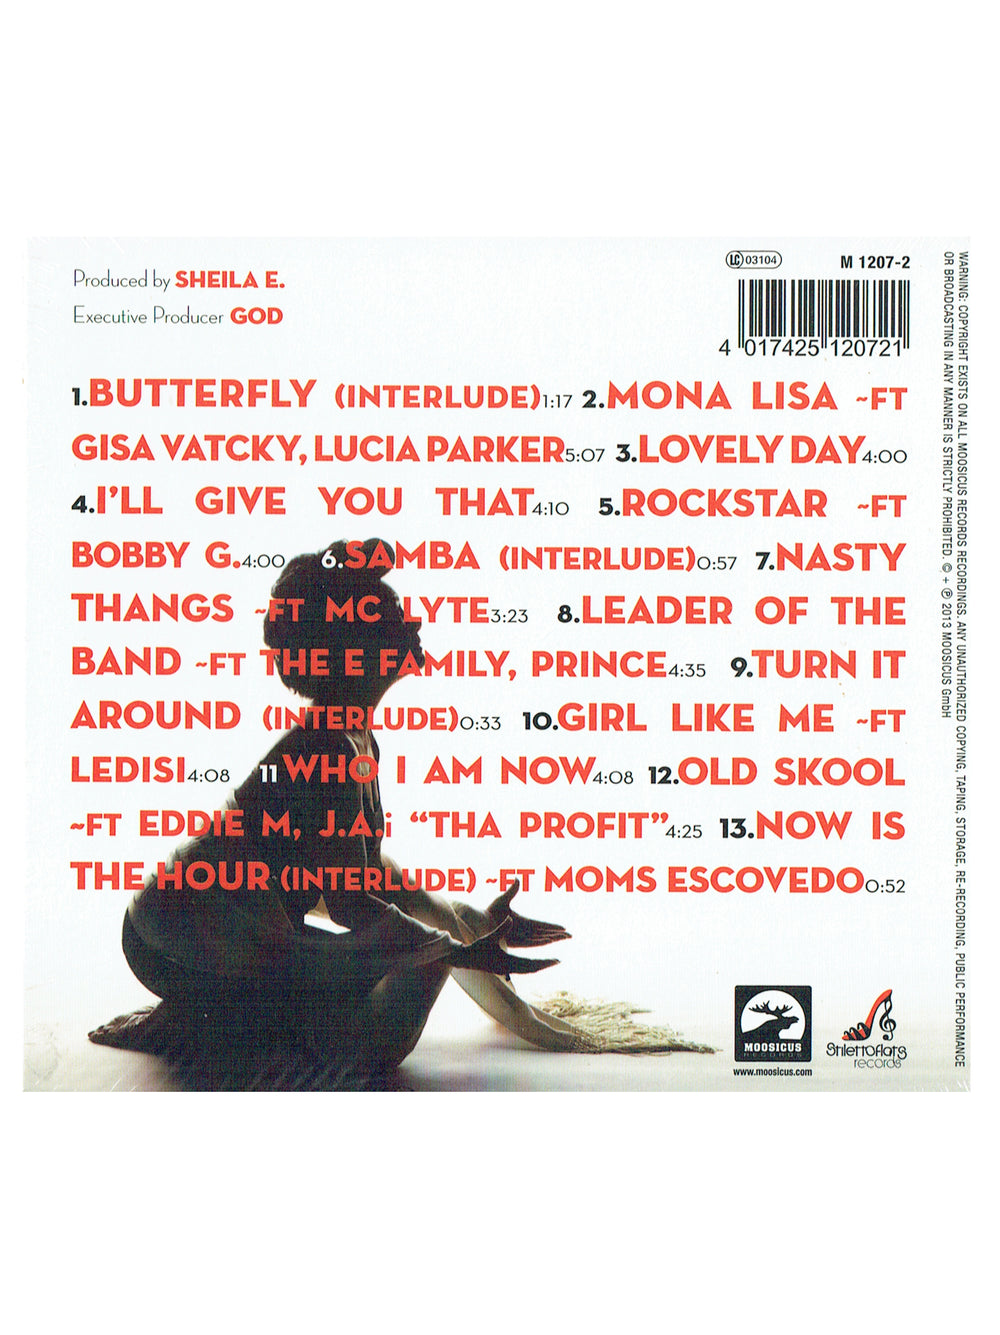 Sheila E ICON CD Album Gatefold Sleeve 2013 Release Pre-Loved Prince SW